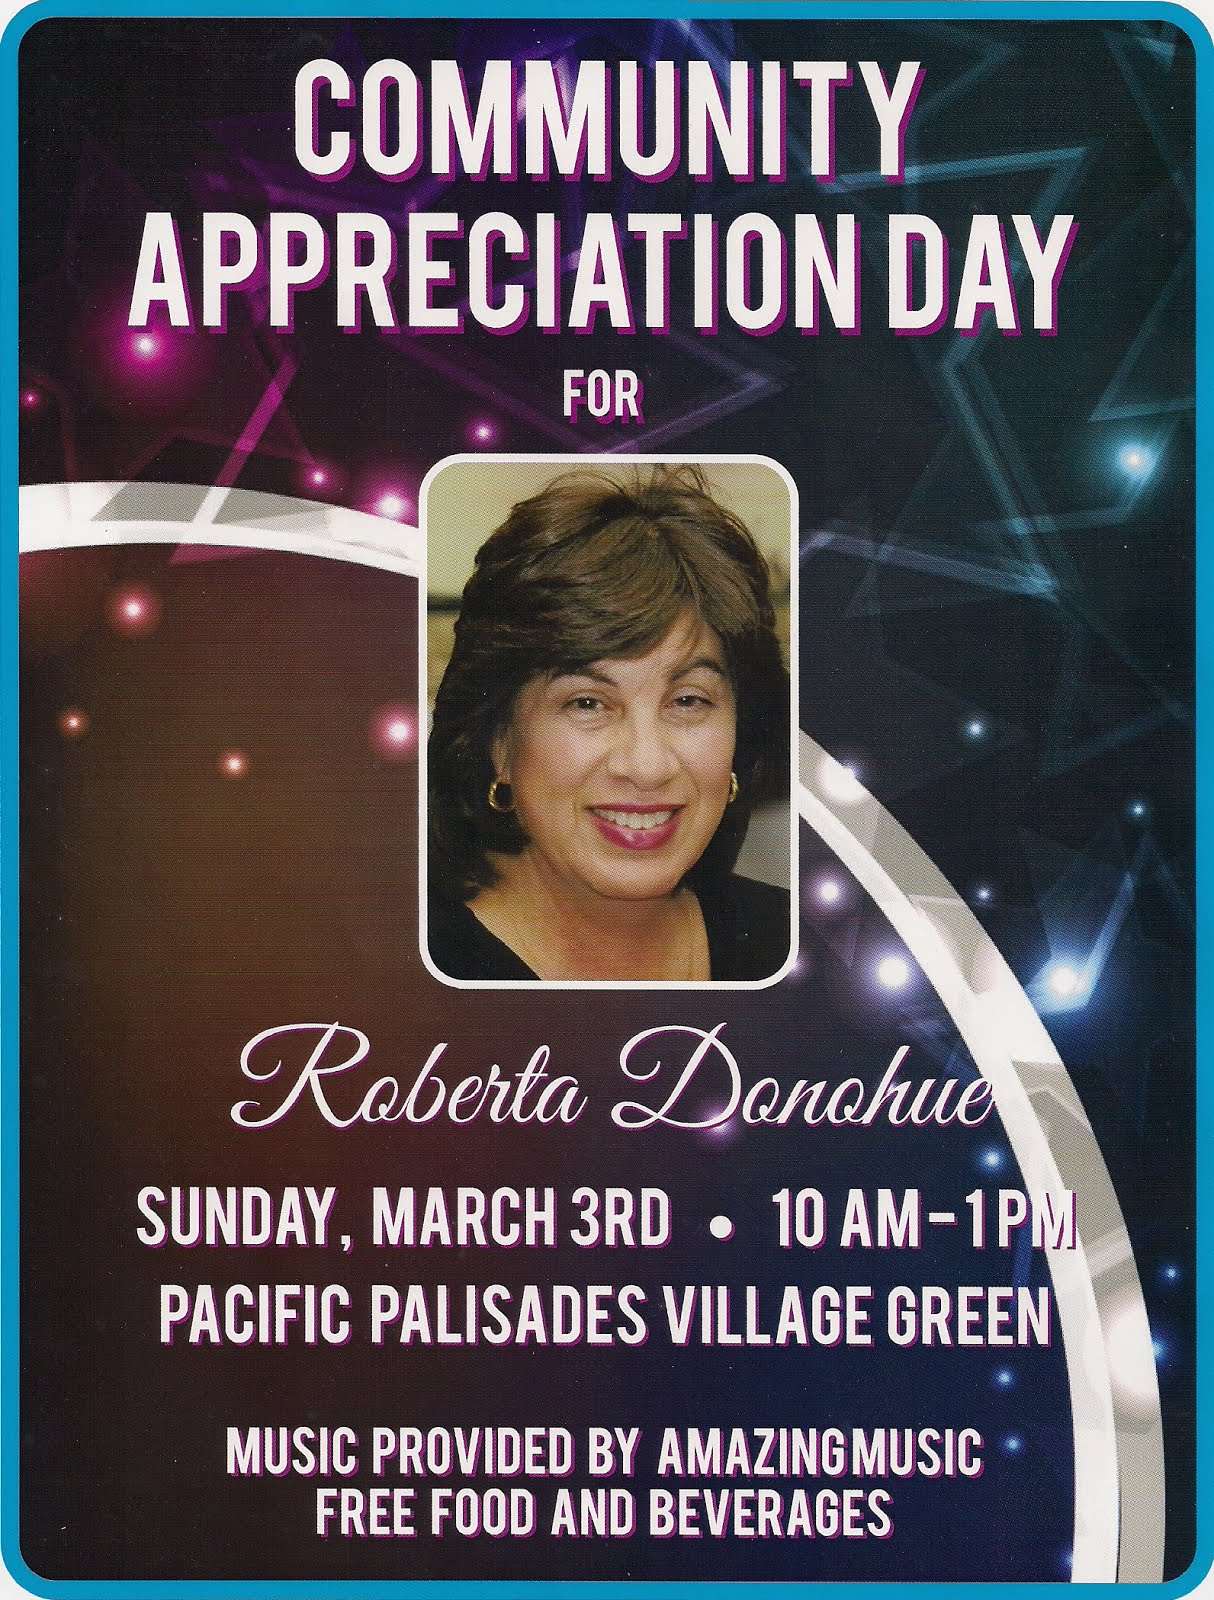 Roberta Donohue Community Celebration